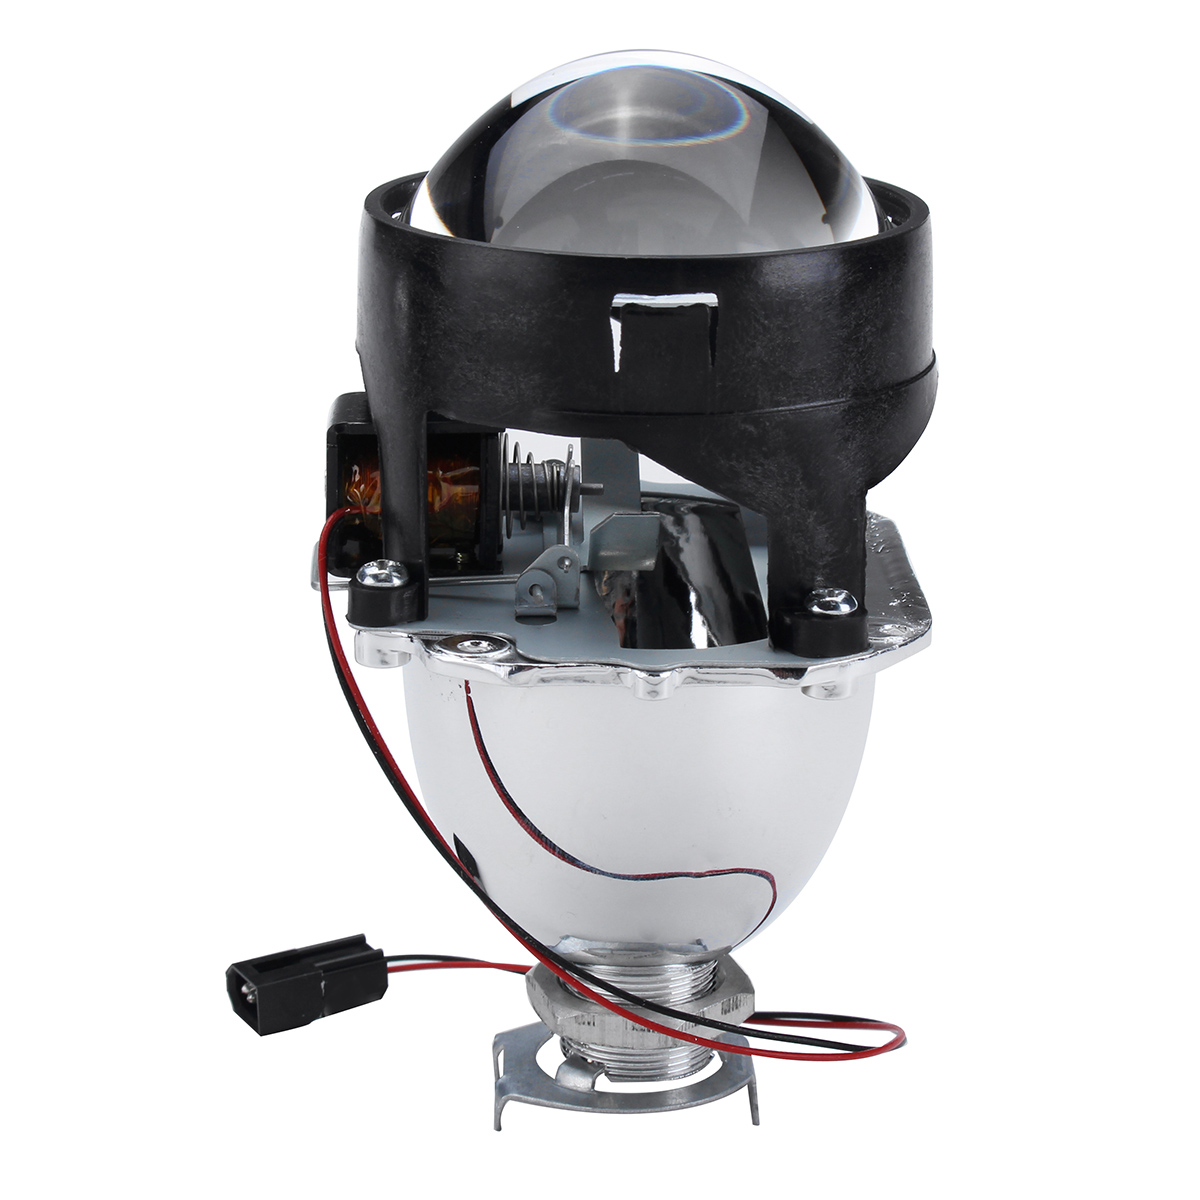 2.5" HID Bi-Xenon Projector Headlights Lens H1 H4 H7 Retrofit Hi/Low Beam LHD/RHD Type